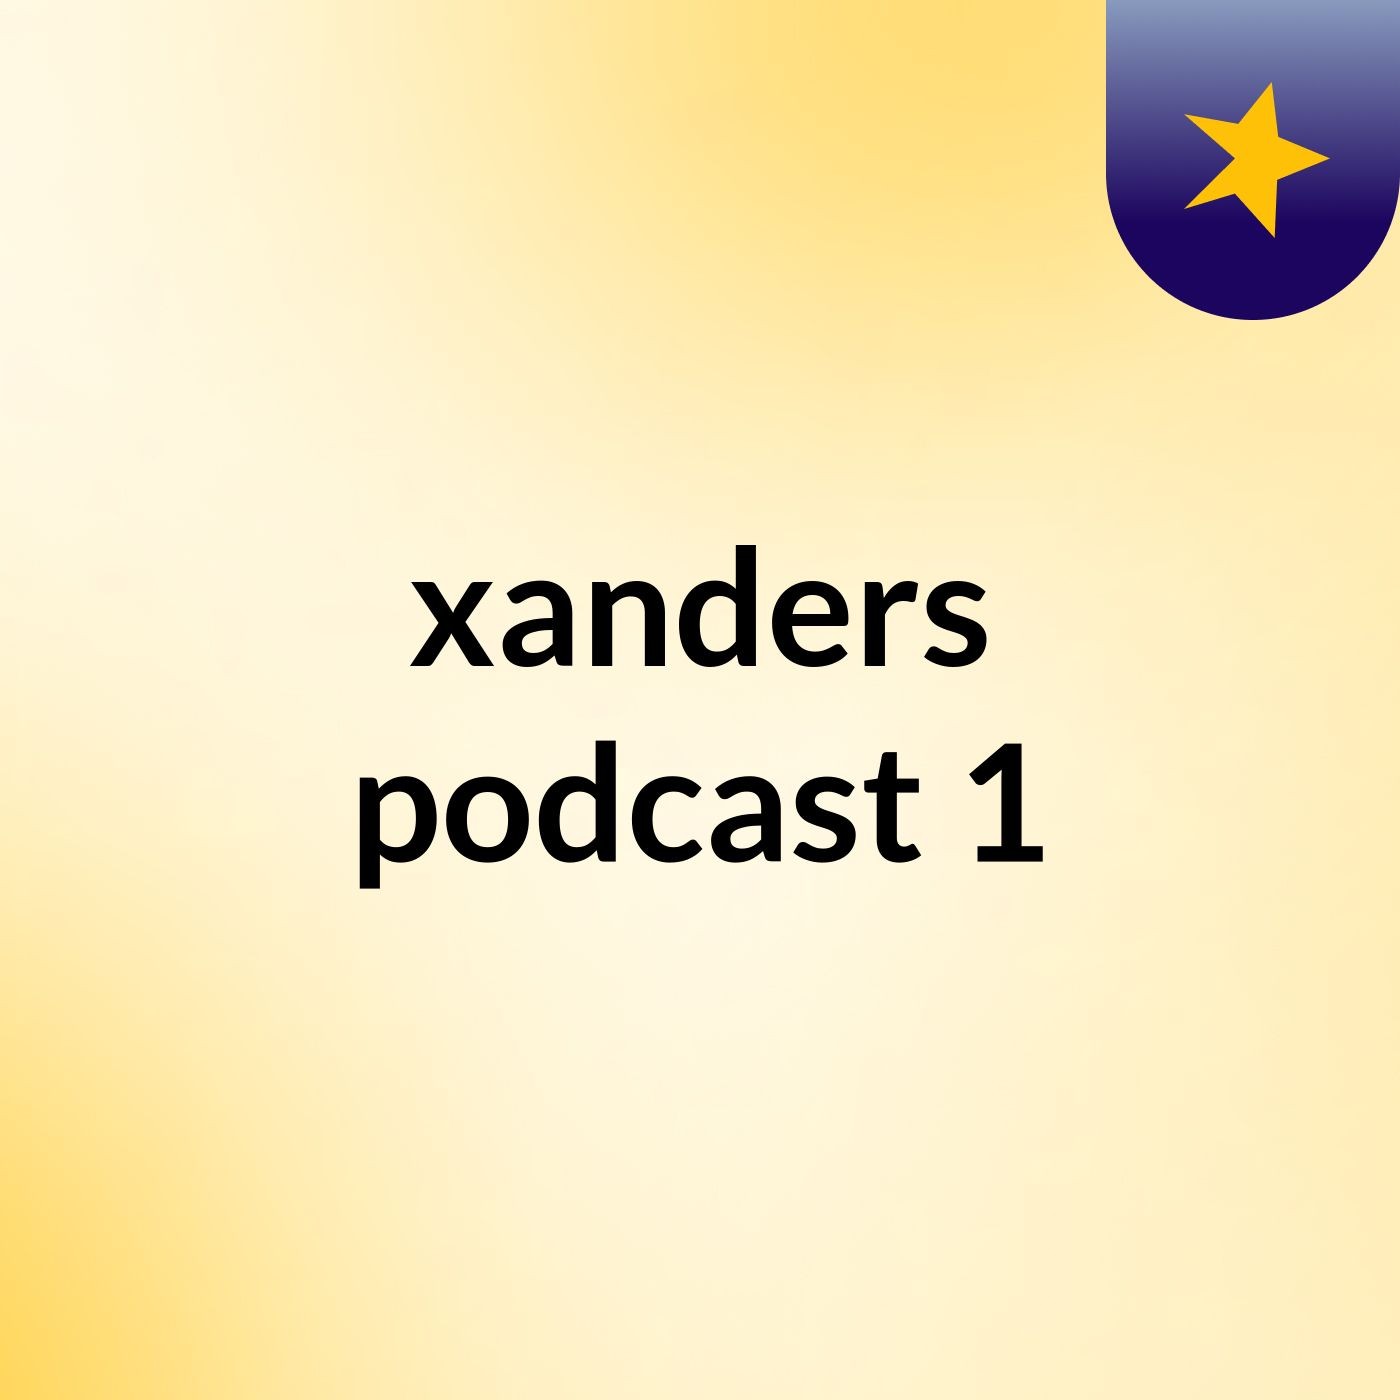 xanders podcast 1